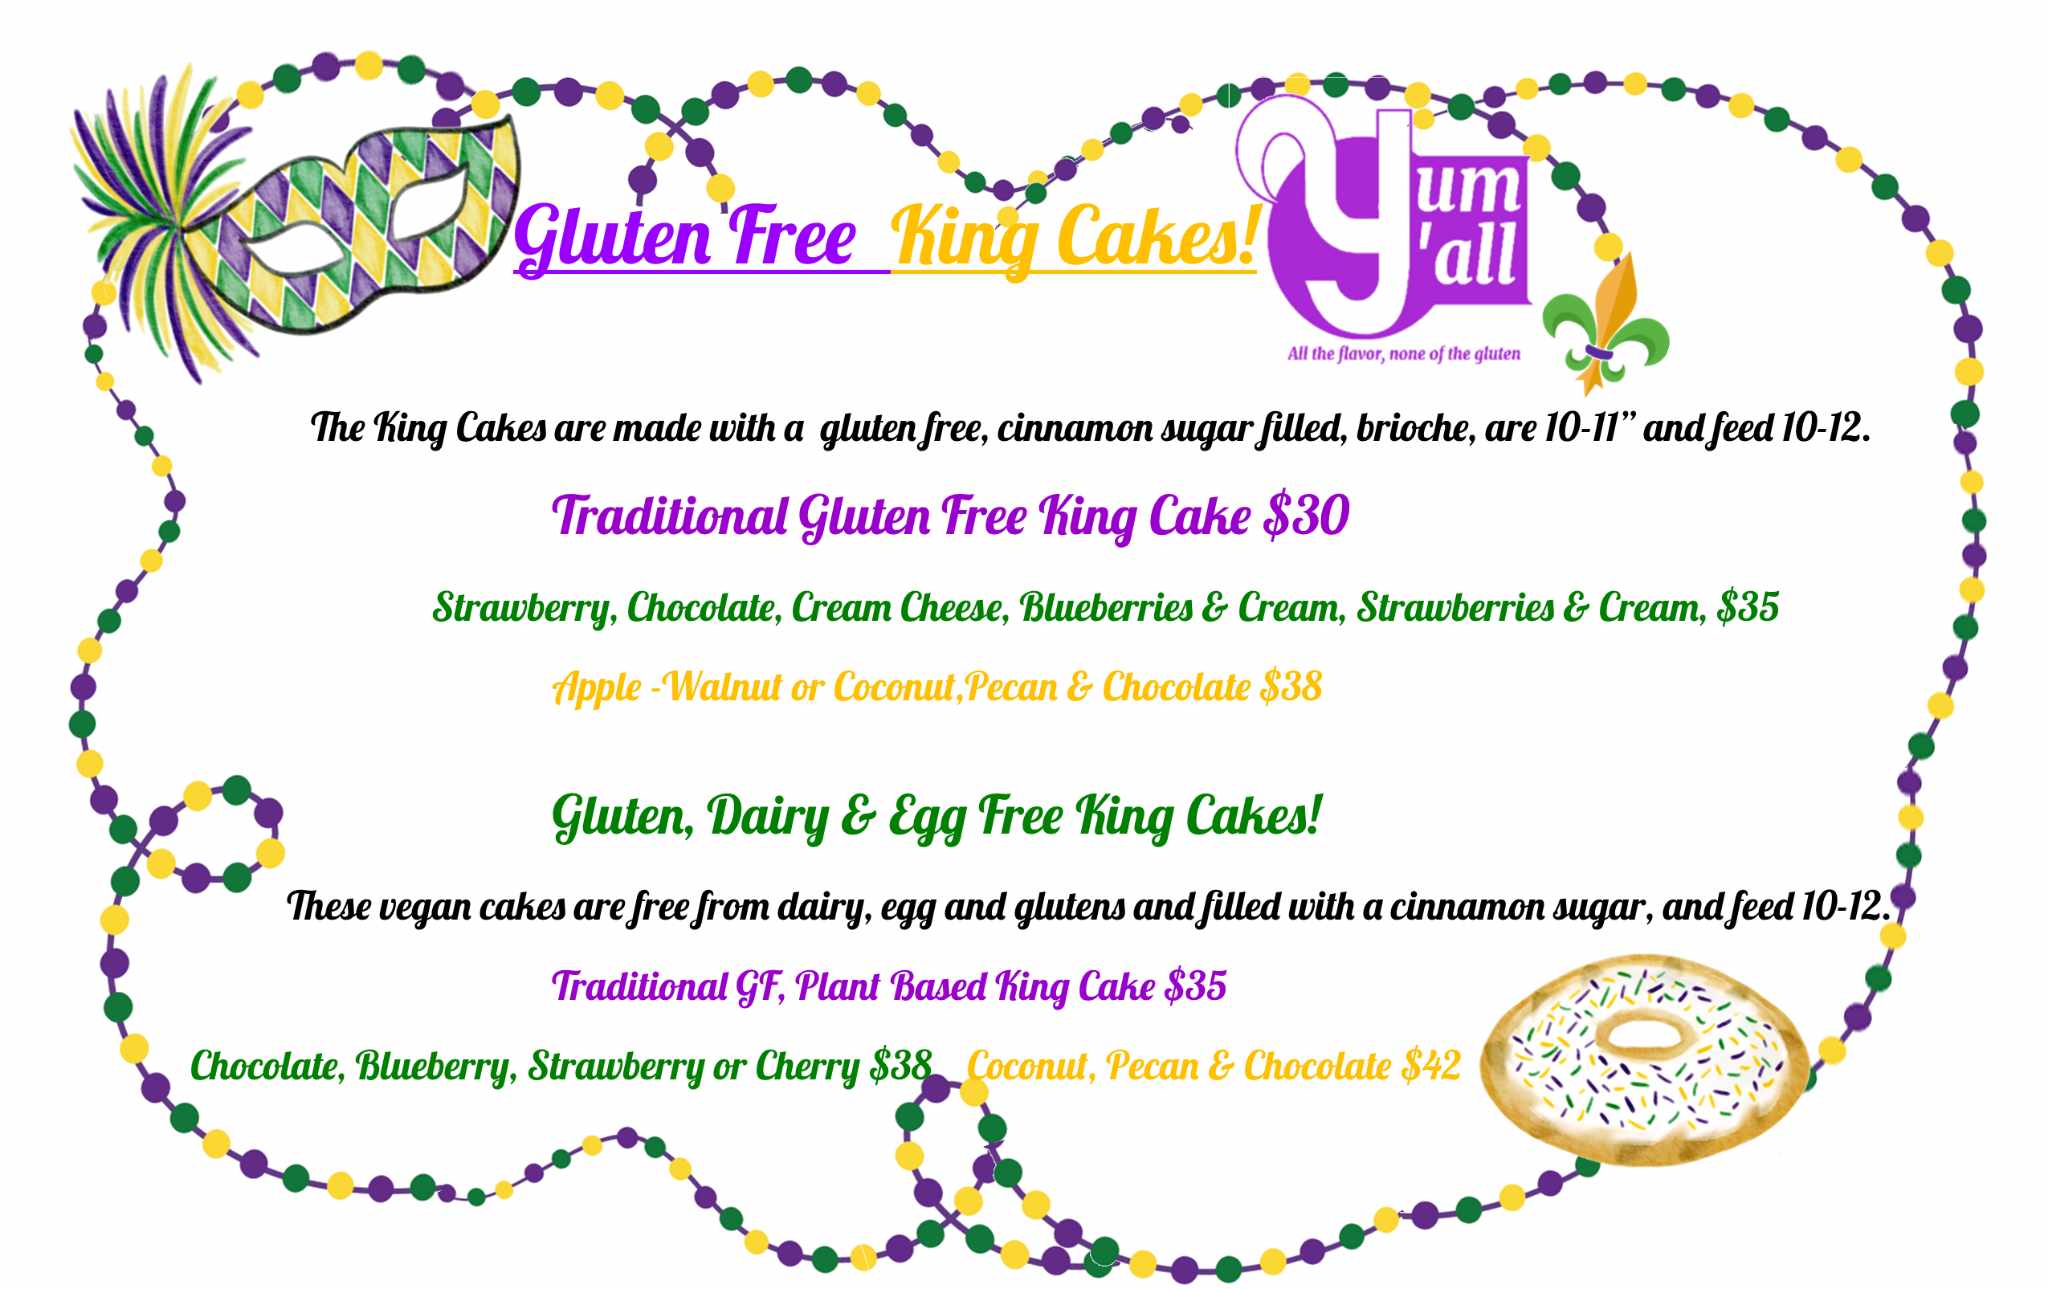 Where to Buy Gluten-free, Sugar-free, and Vegan King Cakes Around Lafayette